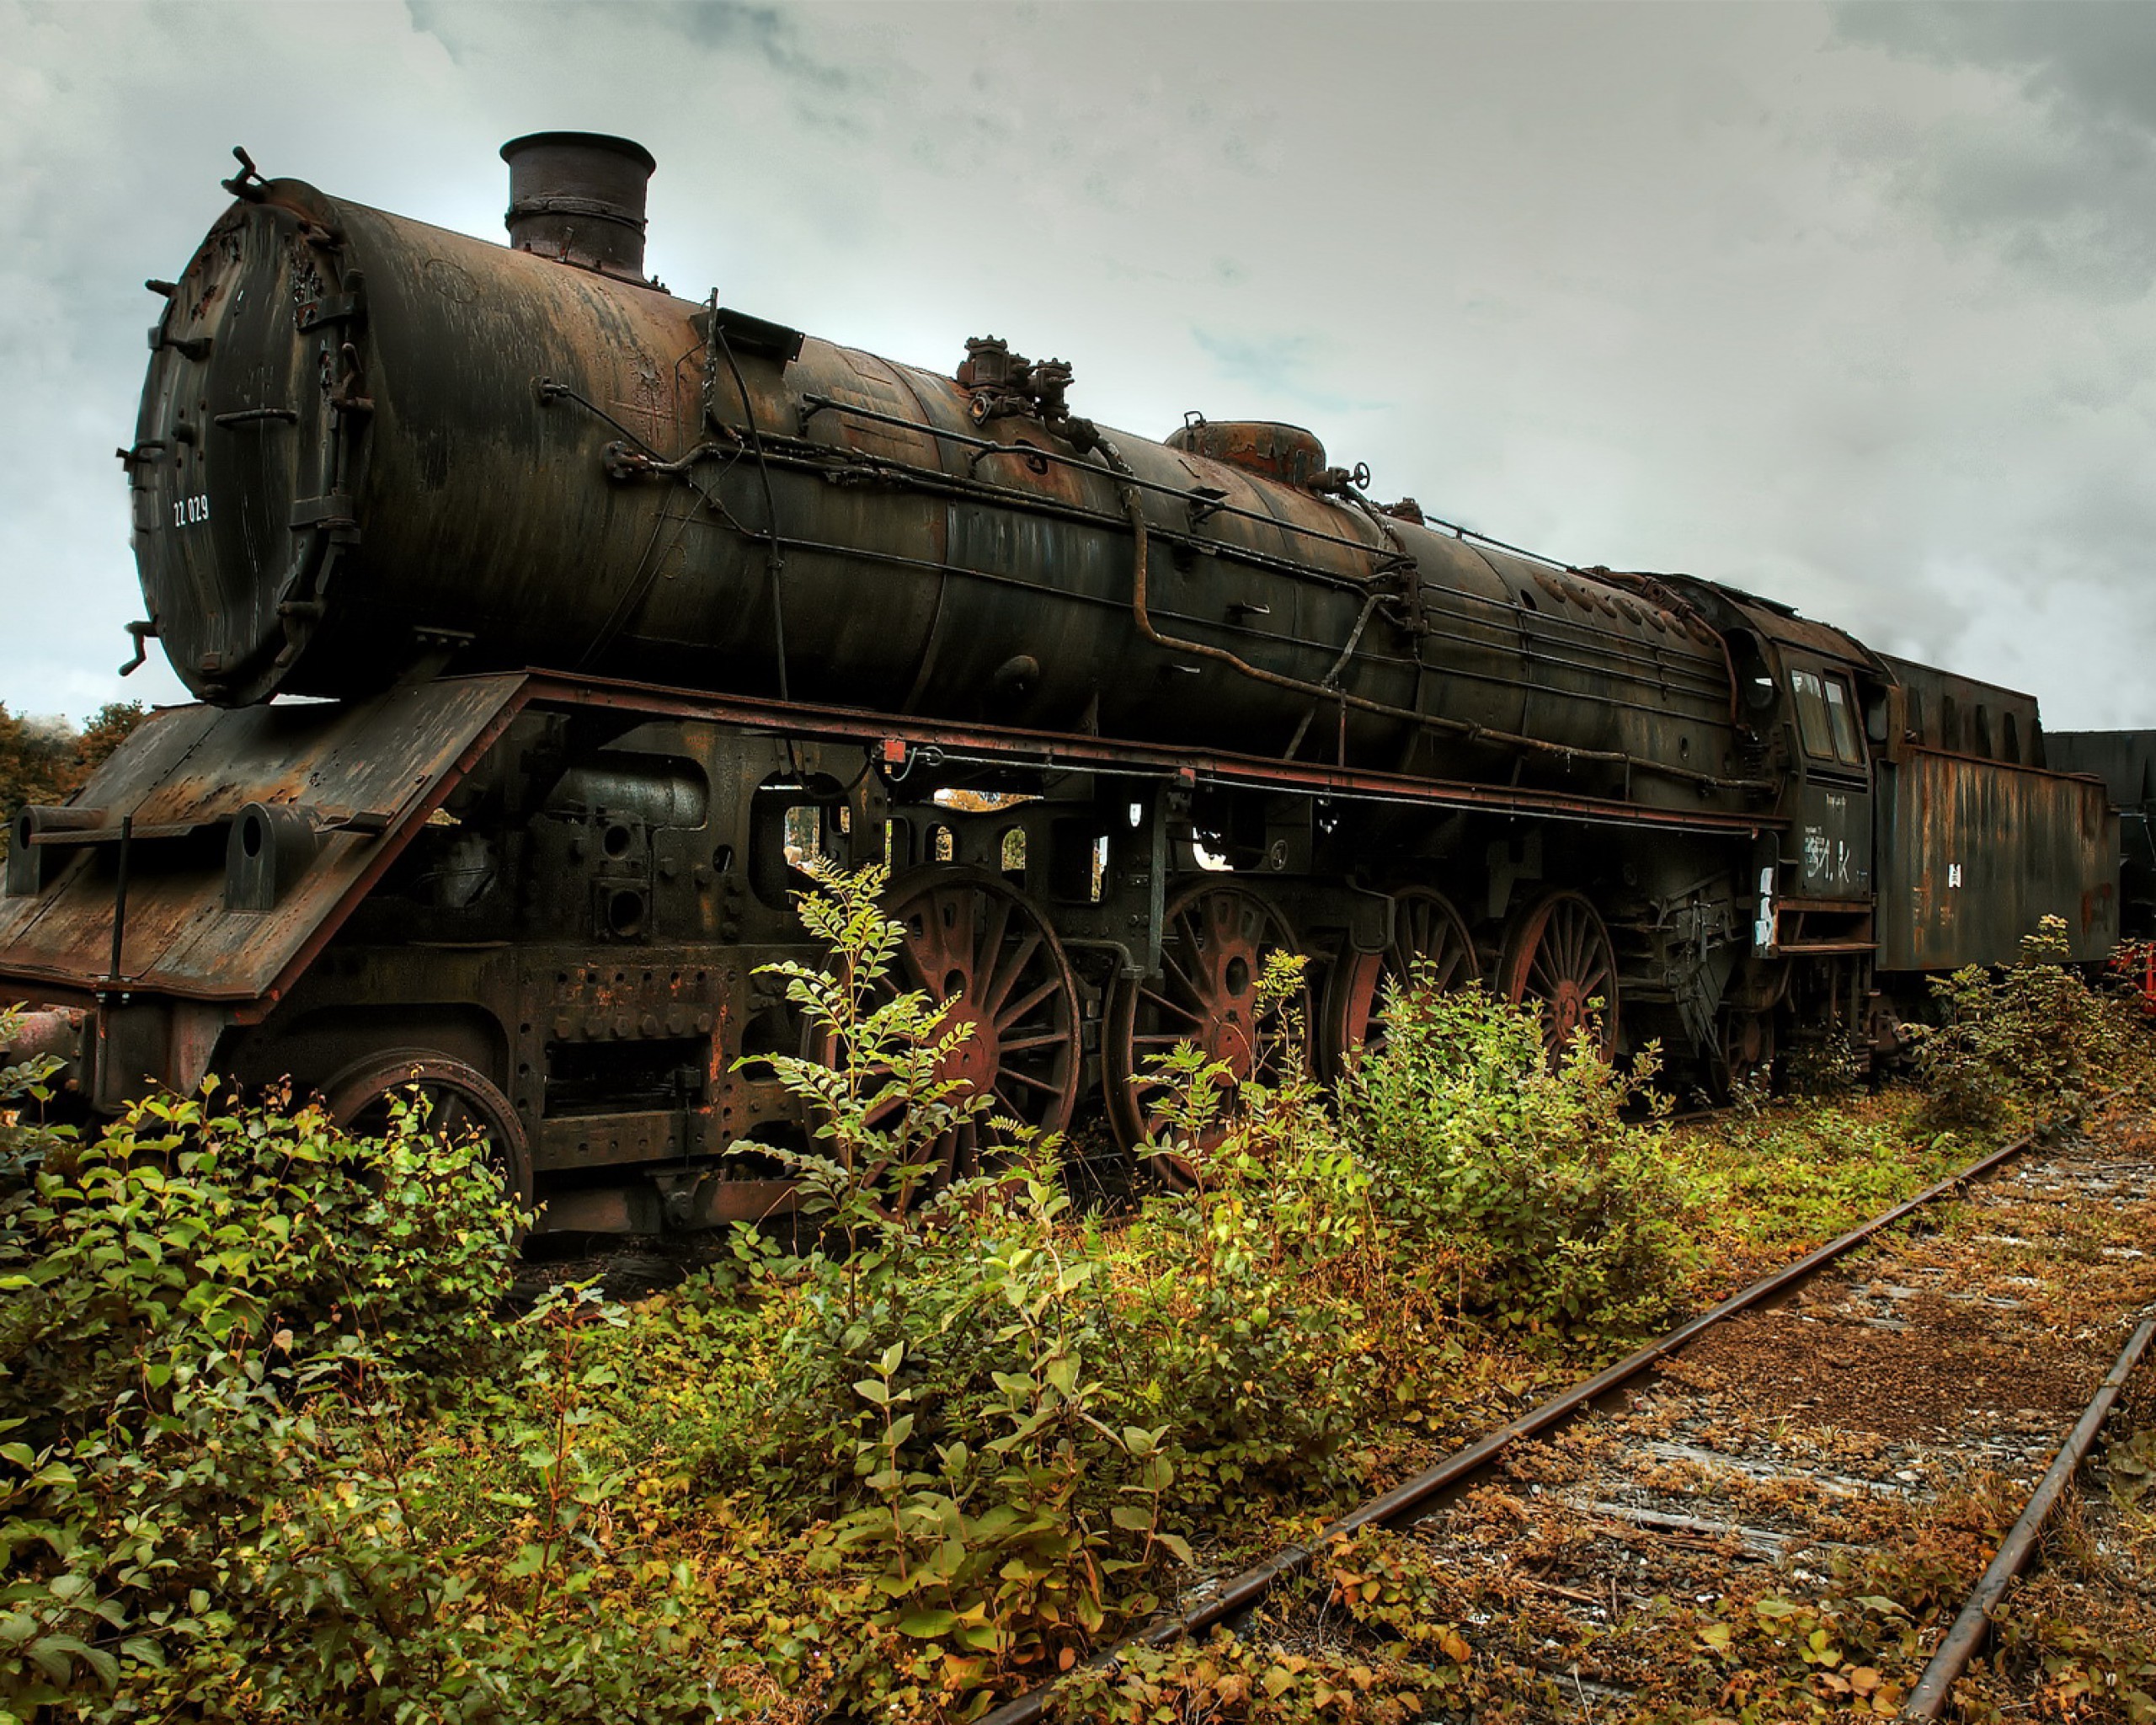 General 2560x2048 train steam locomotive vehicle wreck rust old locomotive